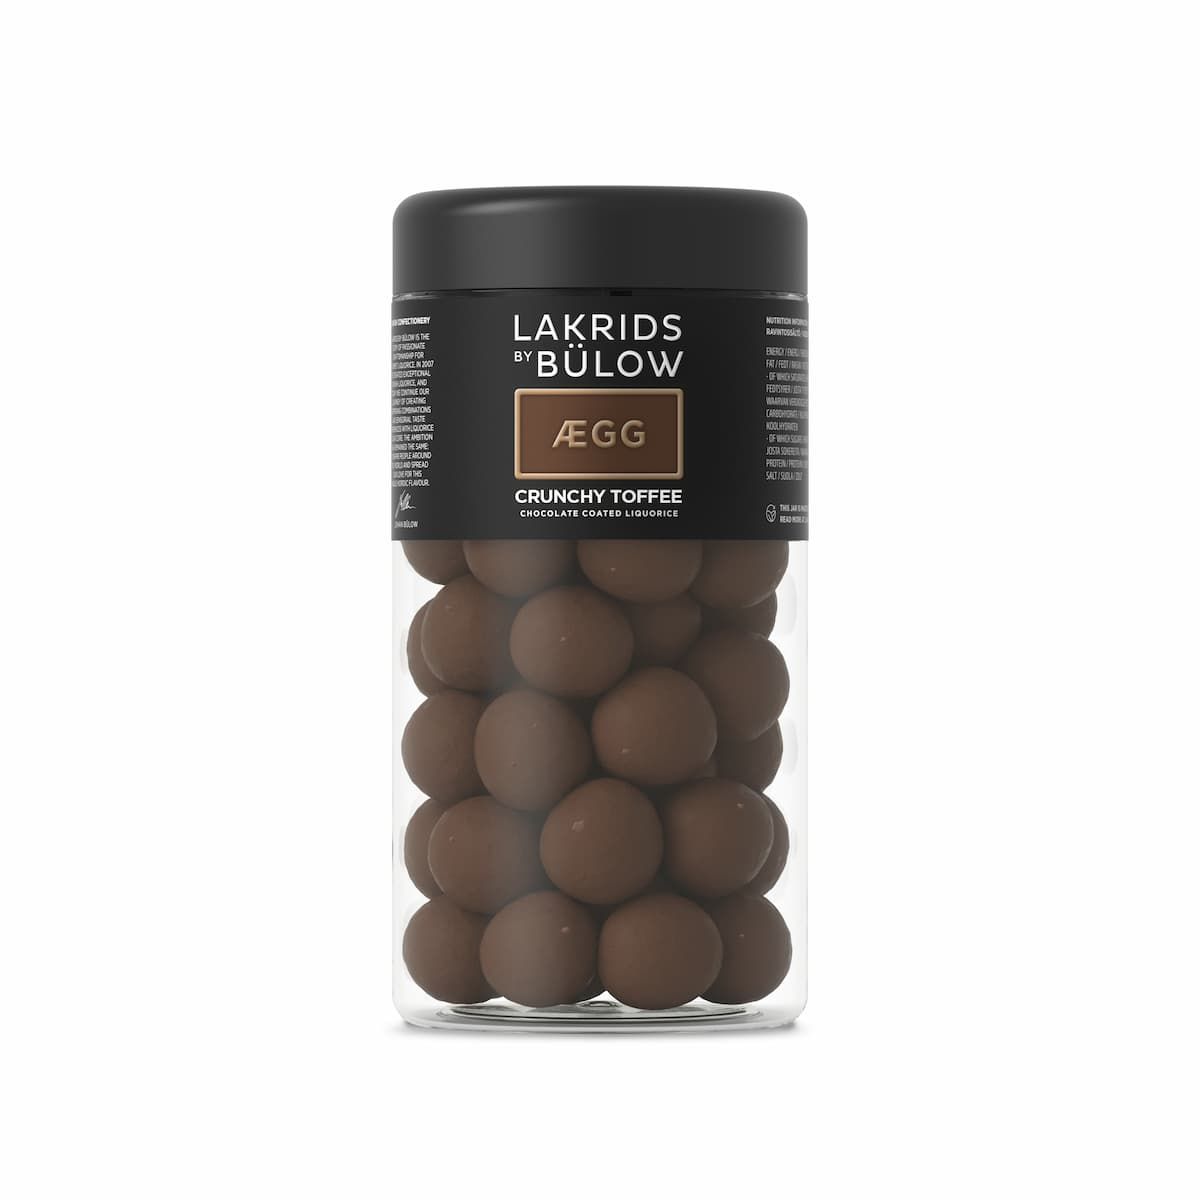 Lakrids by Bülow - Aegg - Crunchy Toffee - Gourmet Lakritz